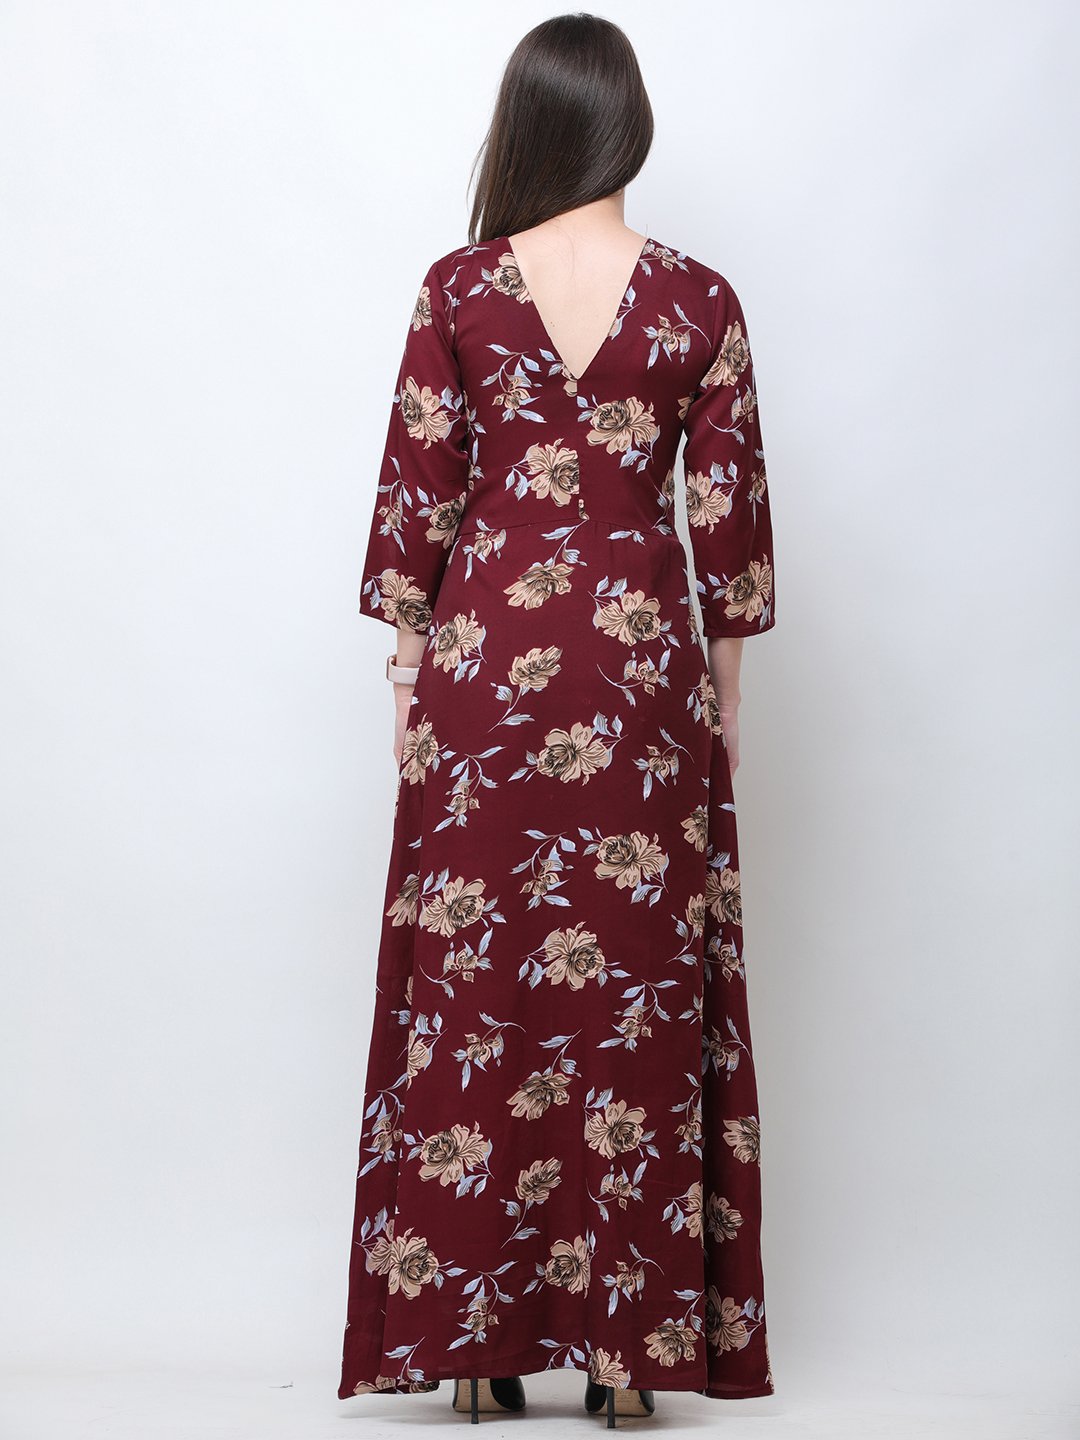 Scorpius floral maxi dress